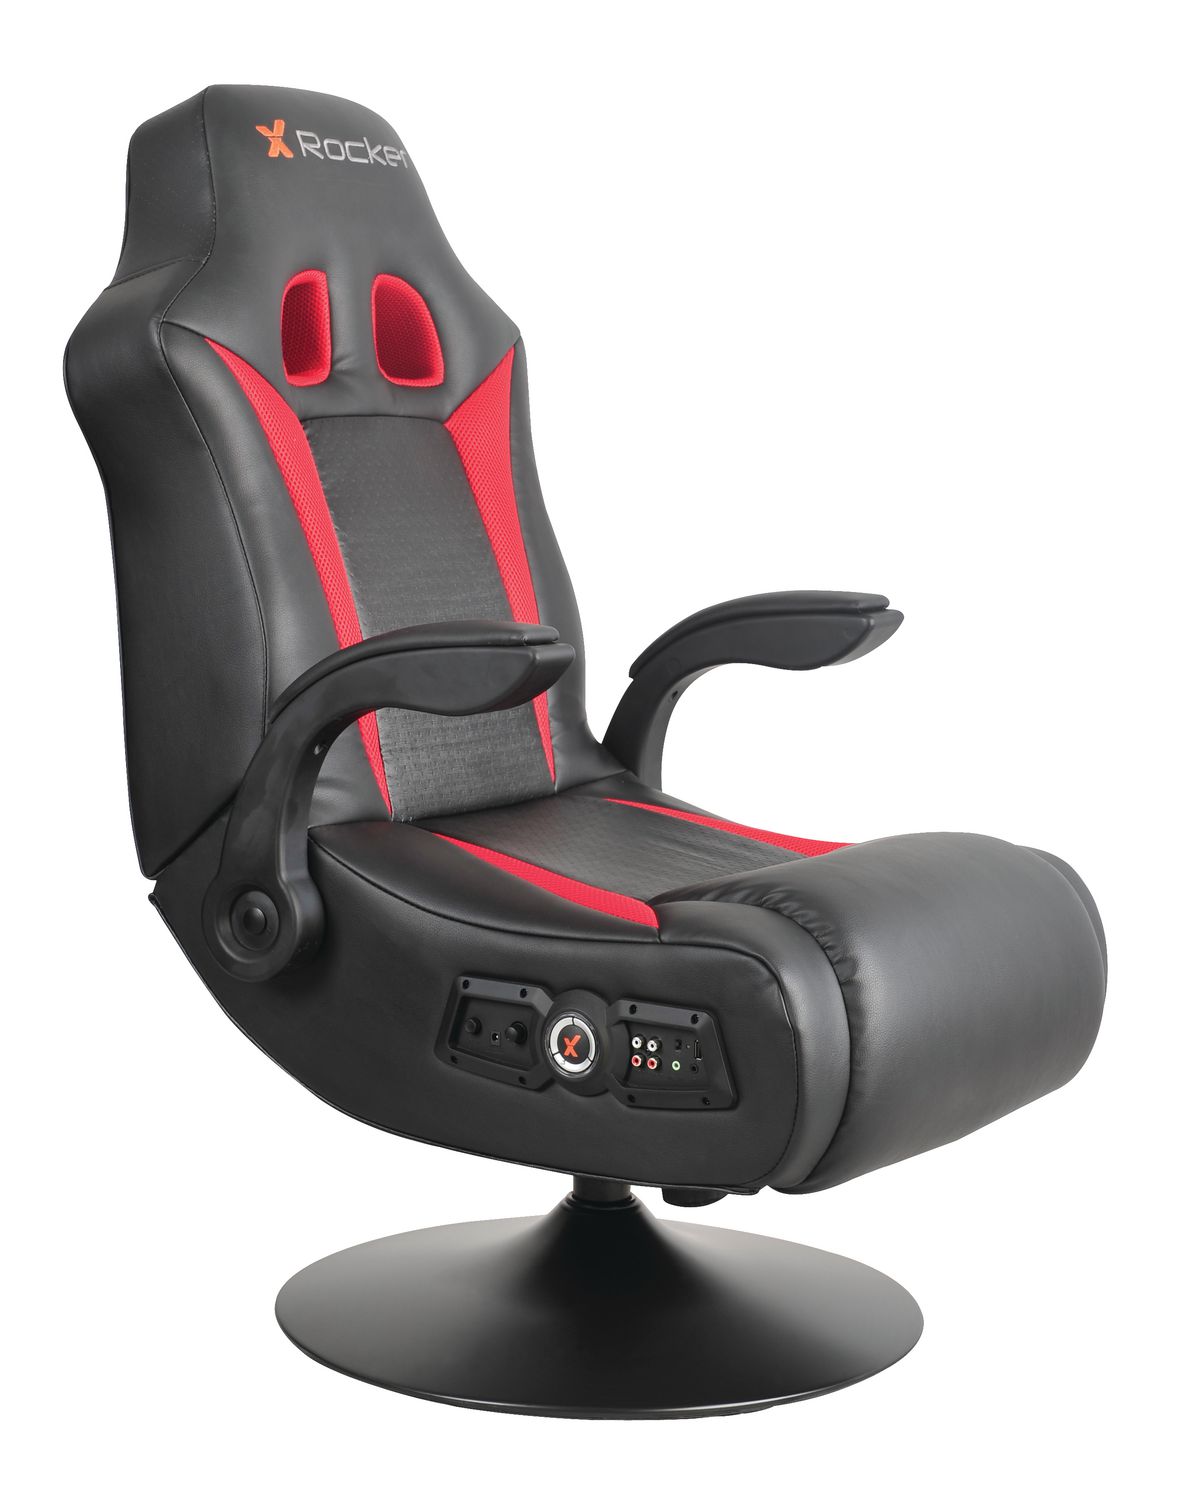 X Rocker Pedestal Gaming Chair 2 1 Bluetooth Audio Without Vibration Walmart Canada